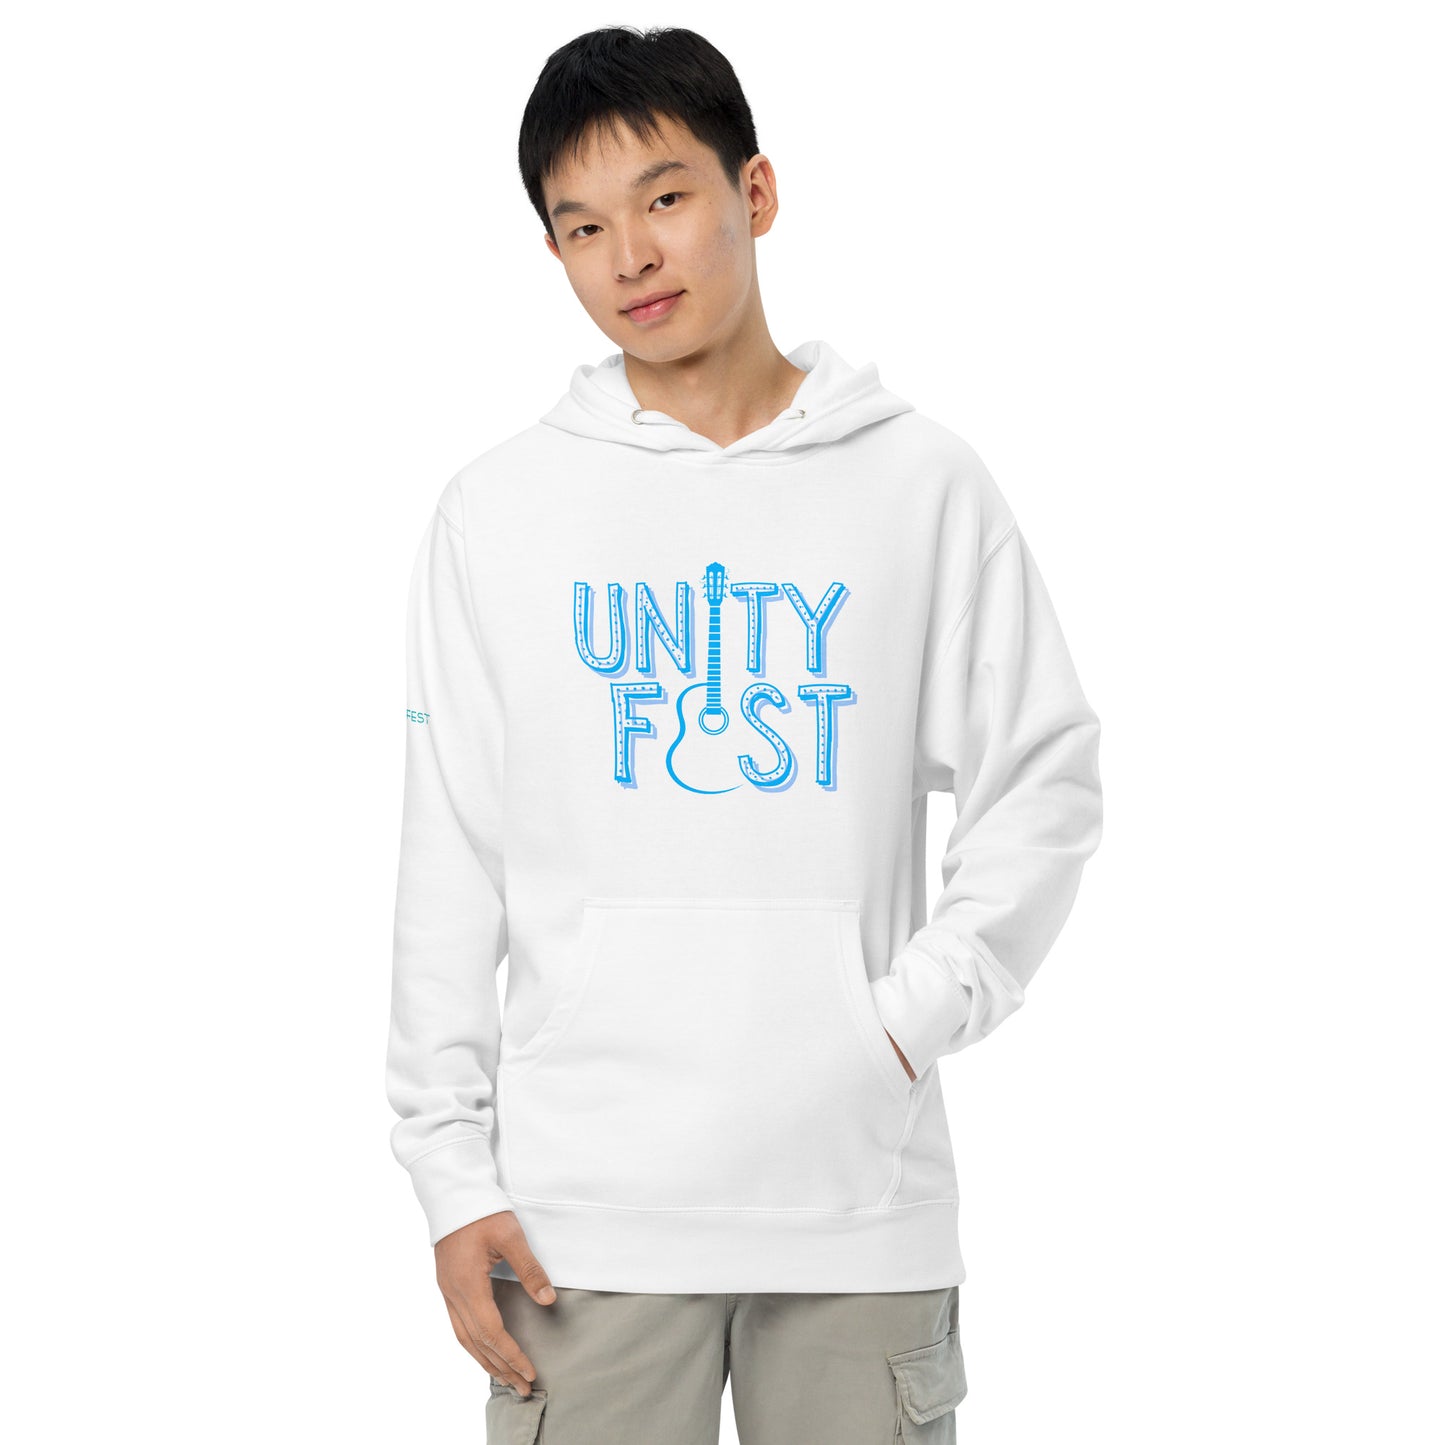 Unityfest Guitar mid-weight hoodie